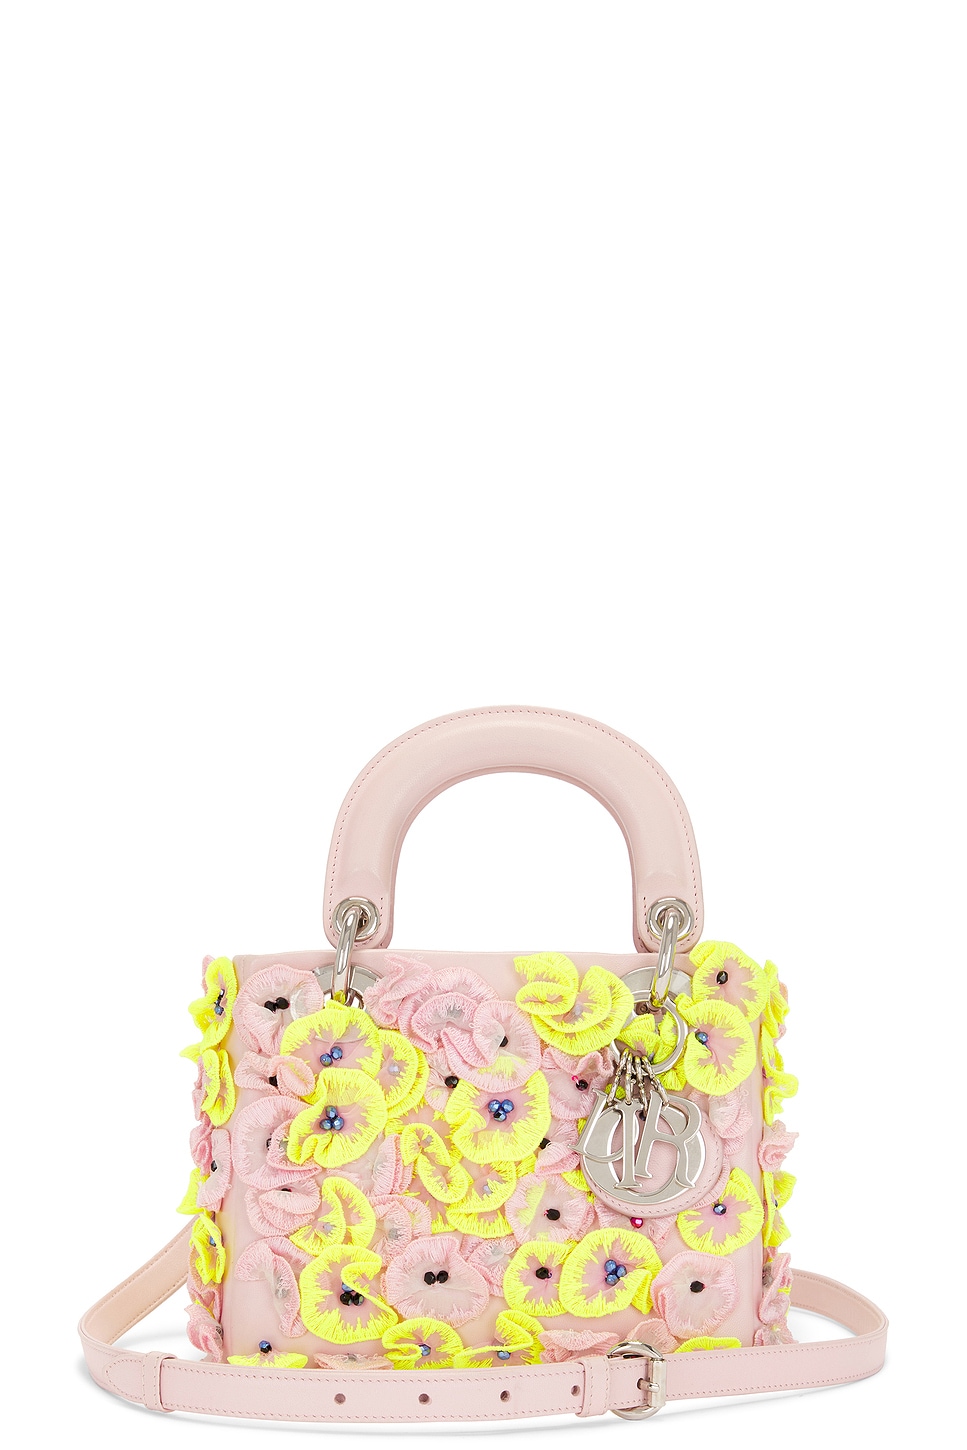 Dior Lady Flower Motif 2 Way Handbag In Pink